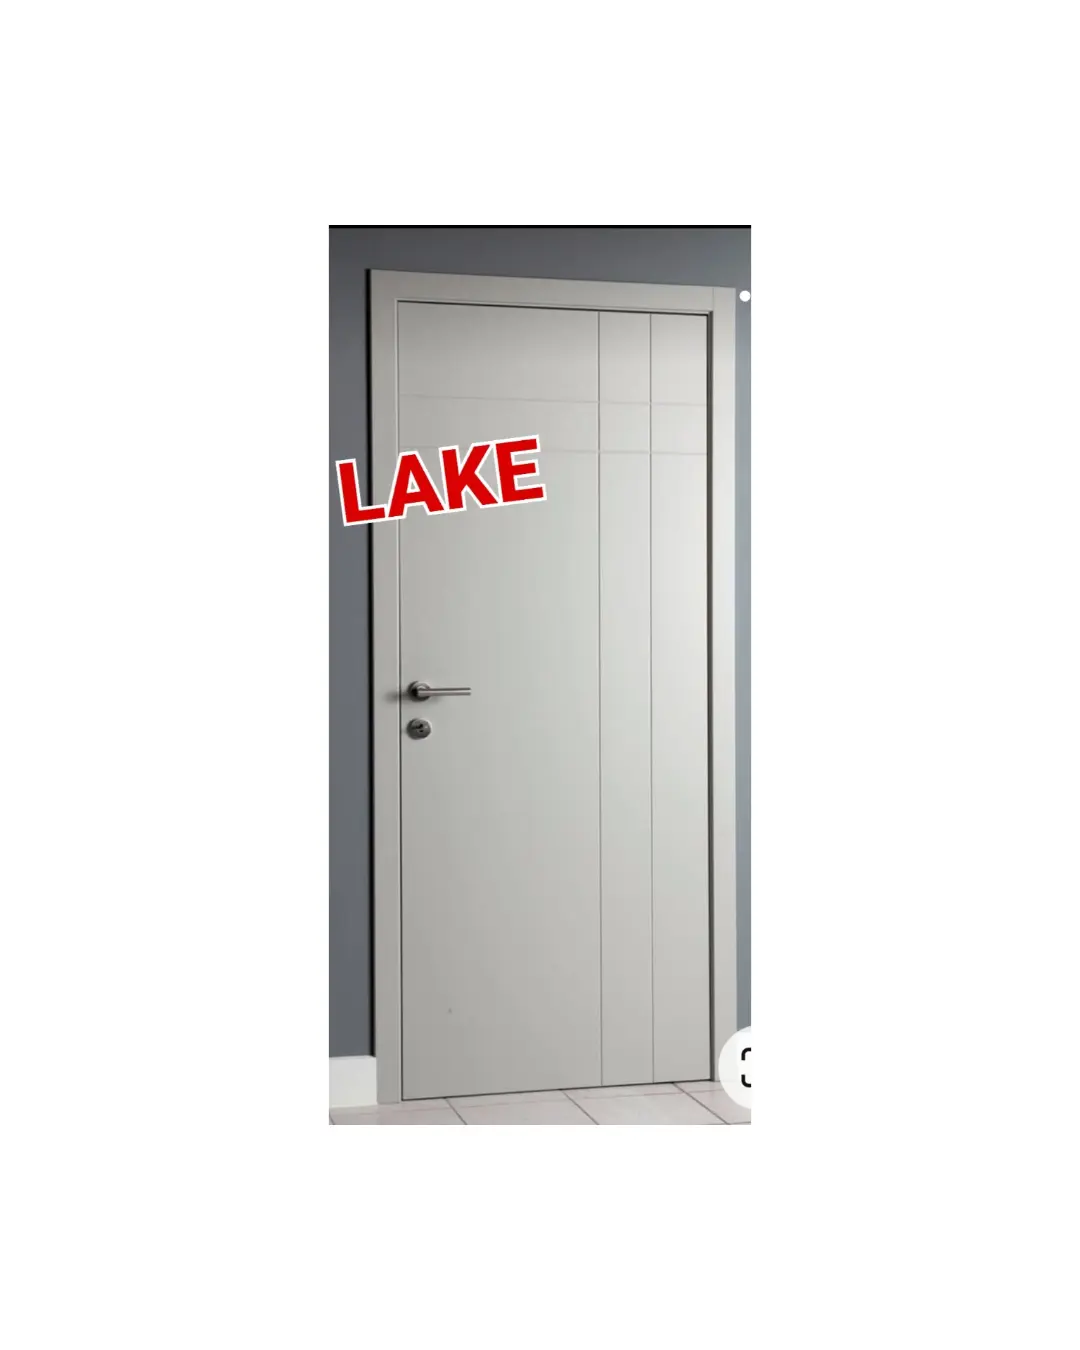 Lake kapı modelleri